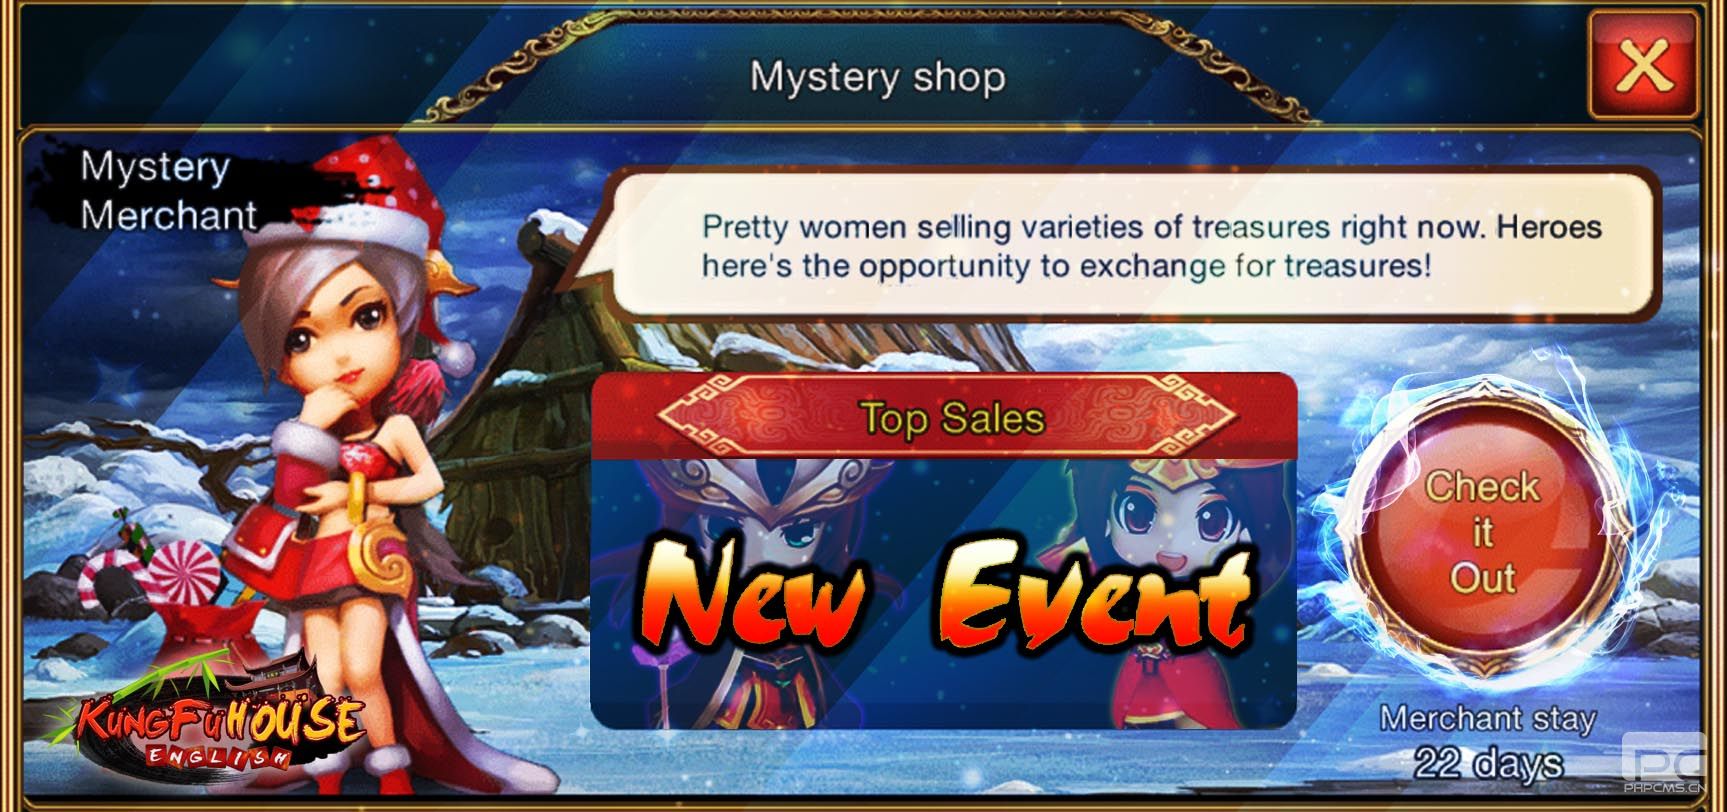 Mystery Merchant is back!